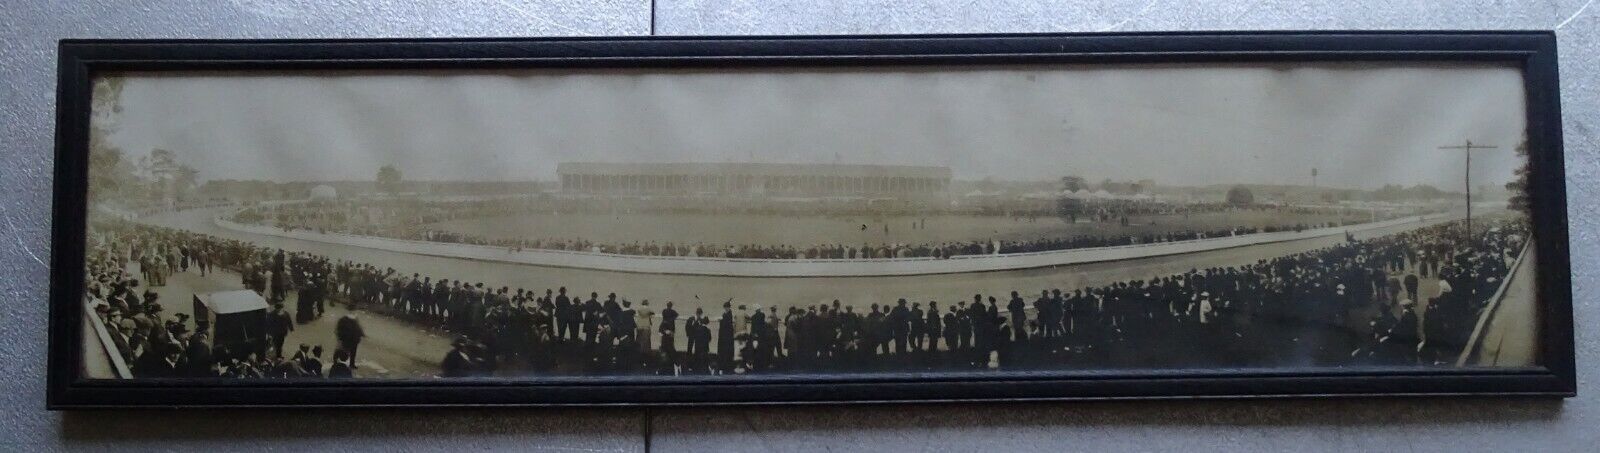 Brockton Fair (Mass.) early 1900's framed 3-foot-long panoramic photograph (Ma.)